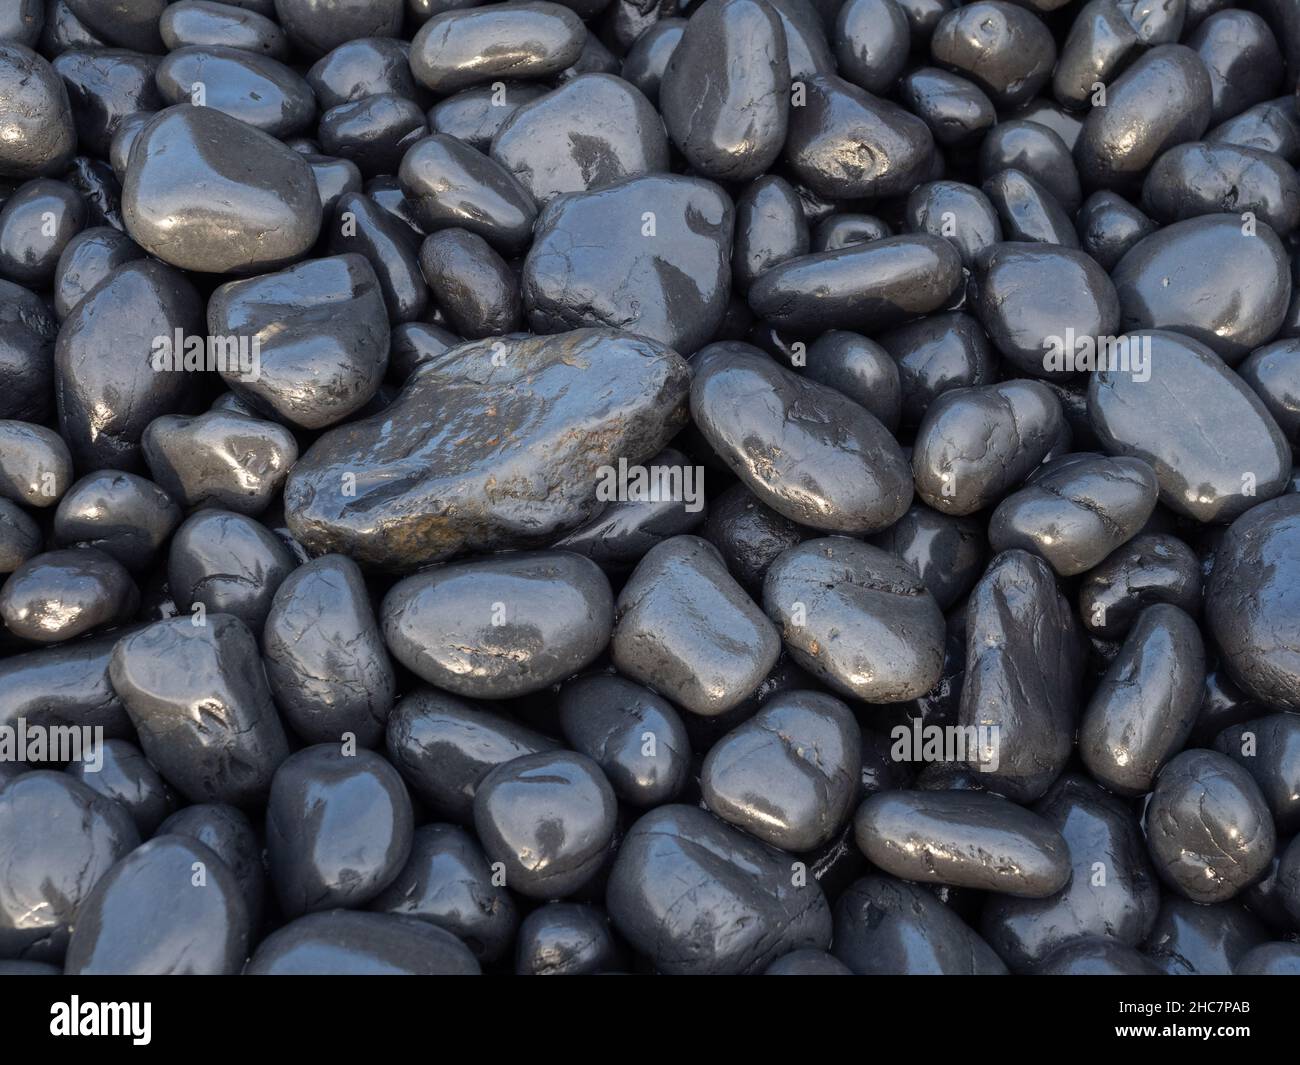 Smooth, wet, shiny black stones of Cobble Beach at Yaquina Head on the Oregon Coast. Stock Photo